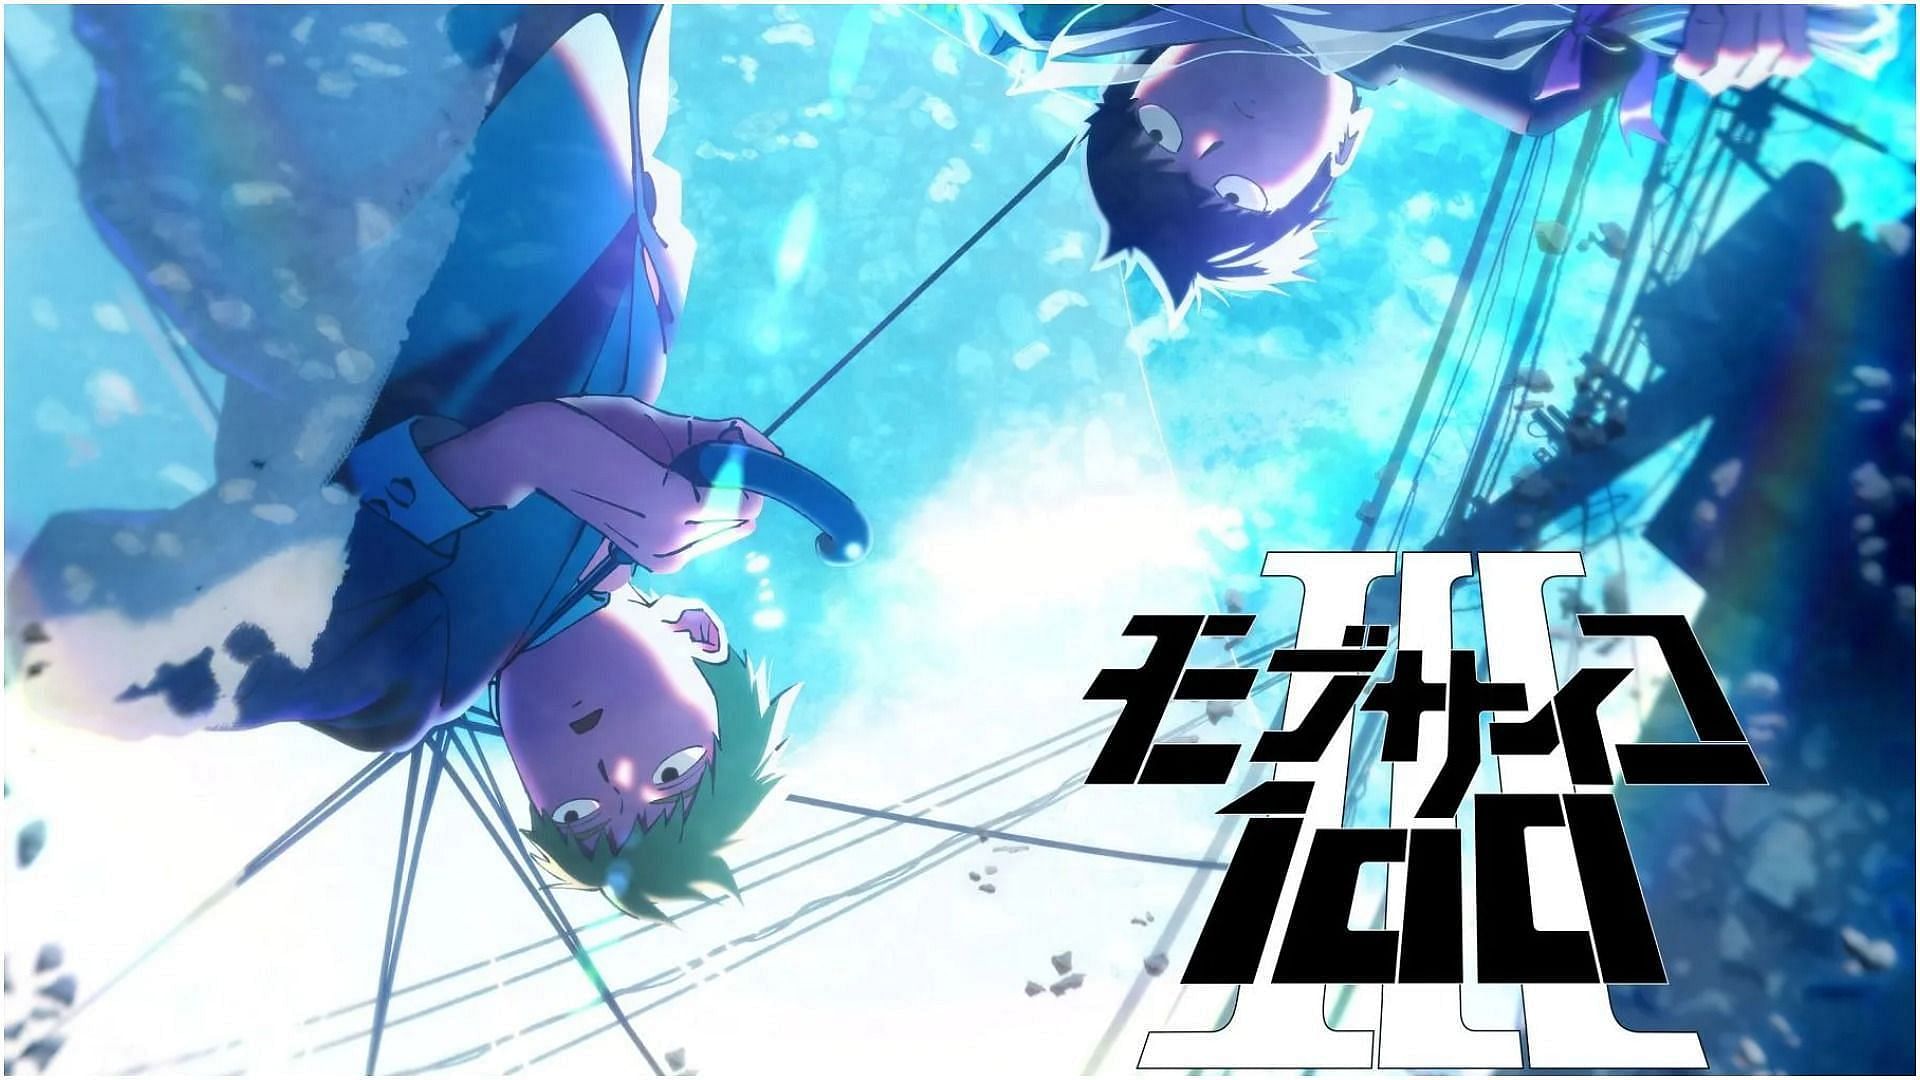 100 man no ichi anime season 2｜TikTok Search